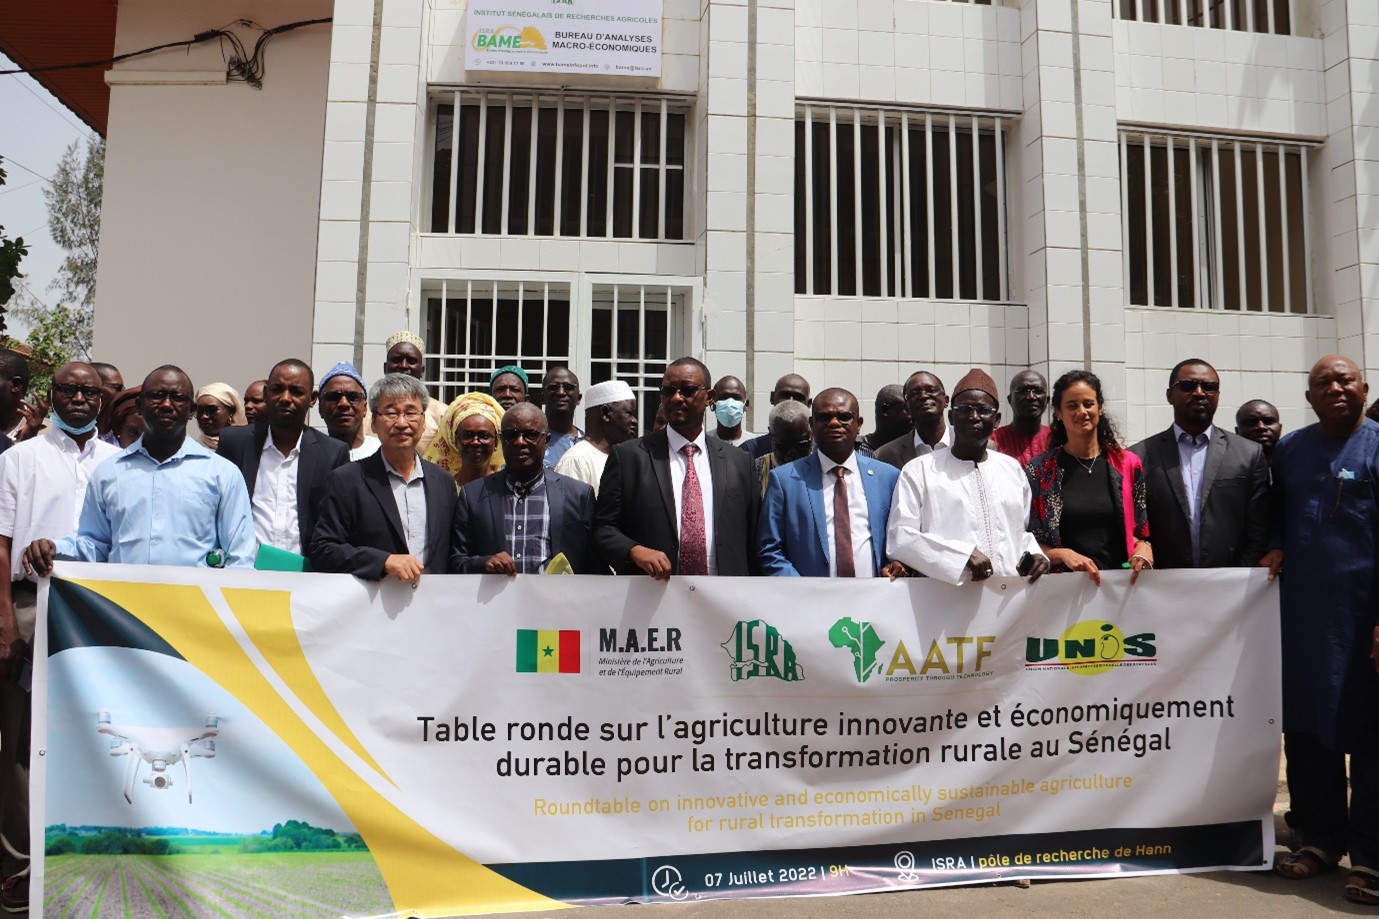 AATF partners Senegal to improve agricultural productivity - AATF